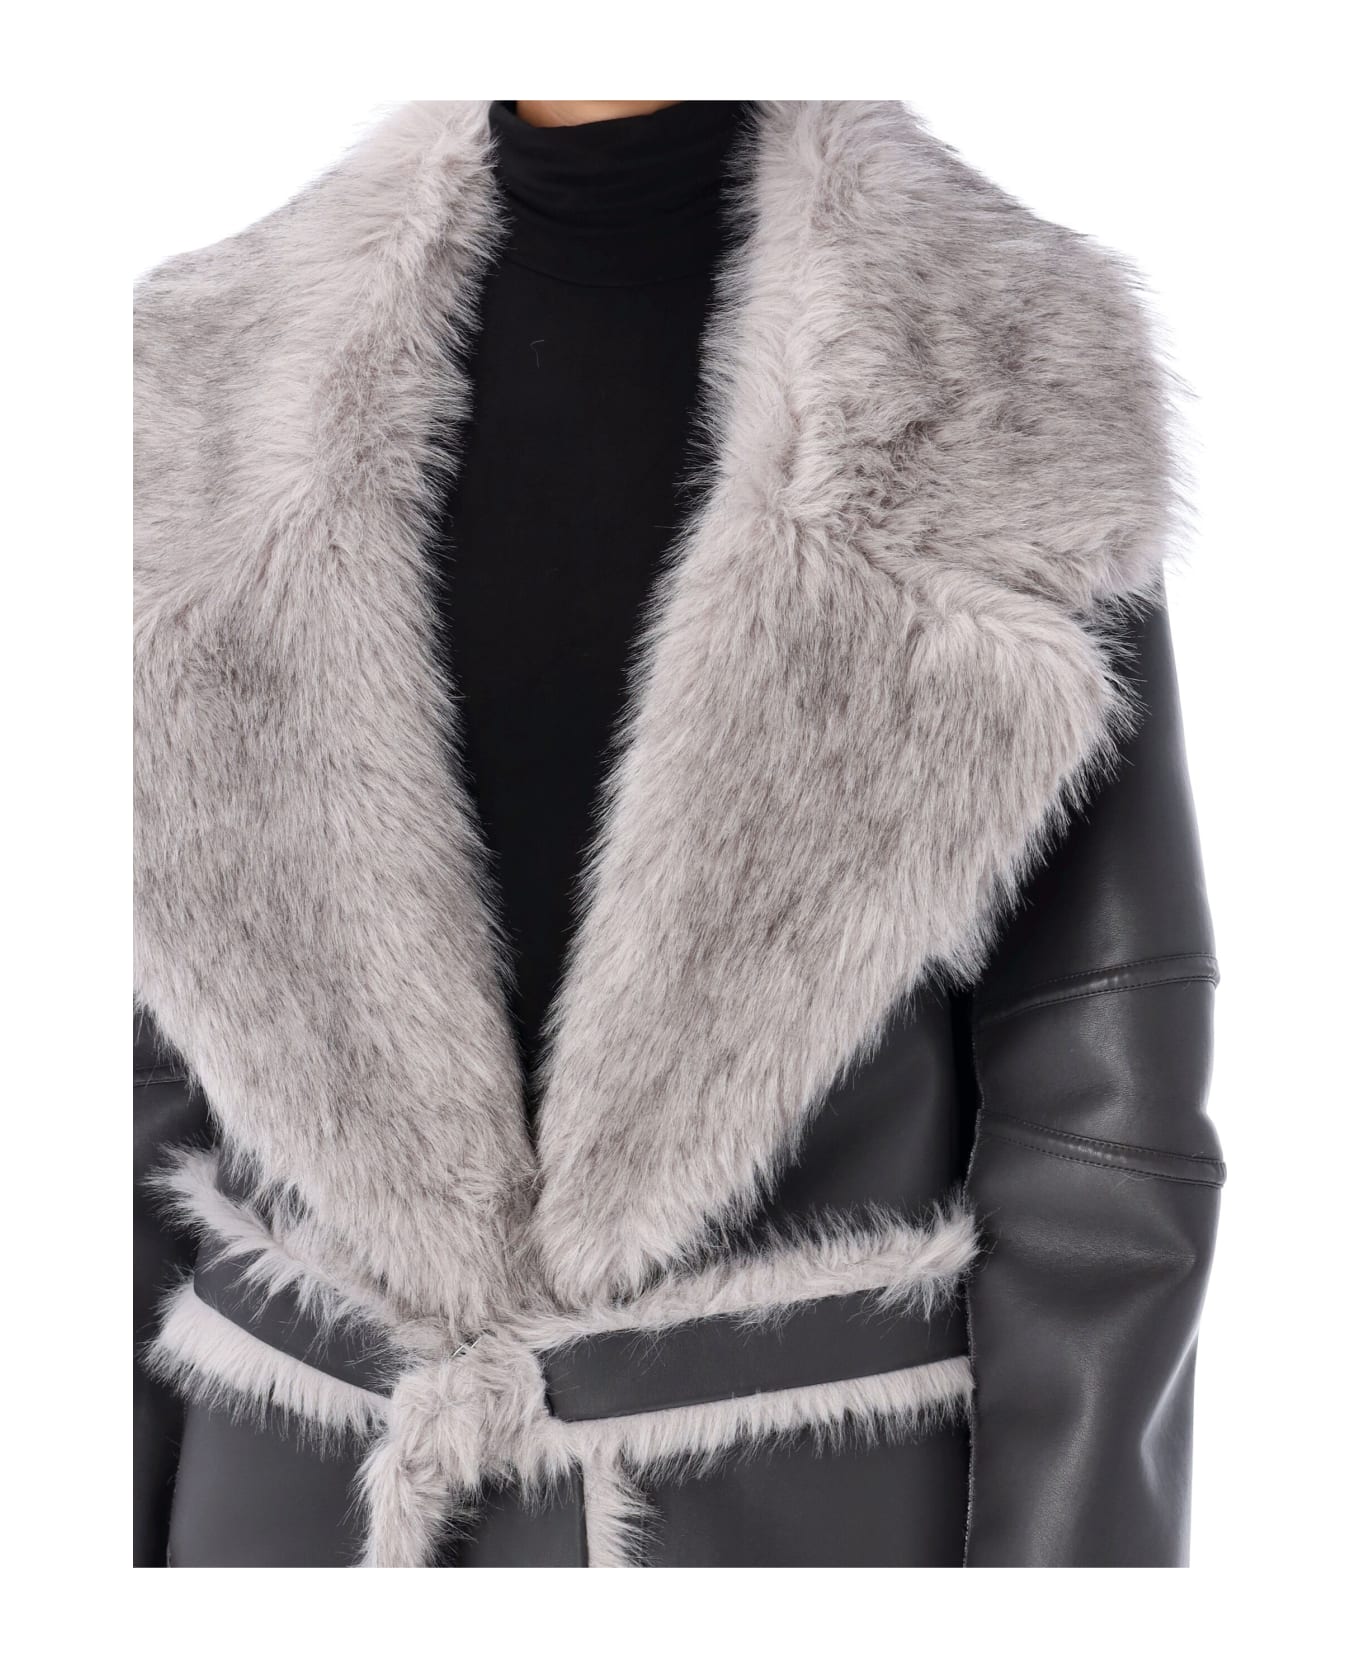 urbancode Eco-fur Coat - SLATE GREY